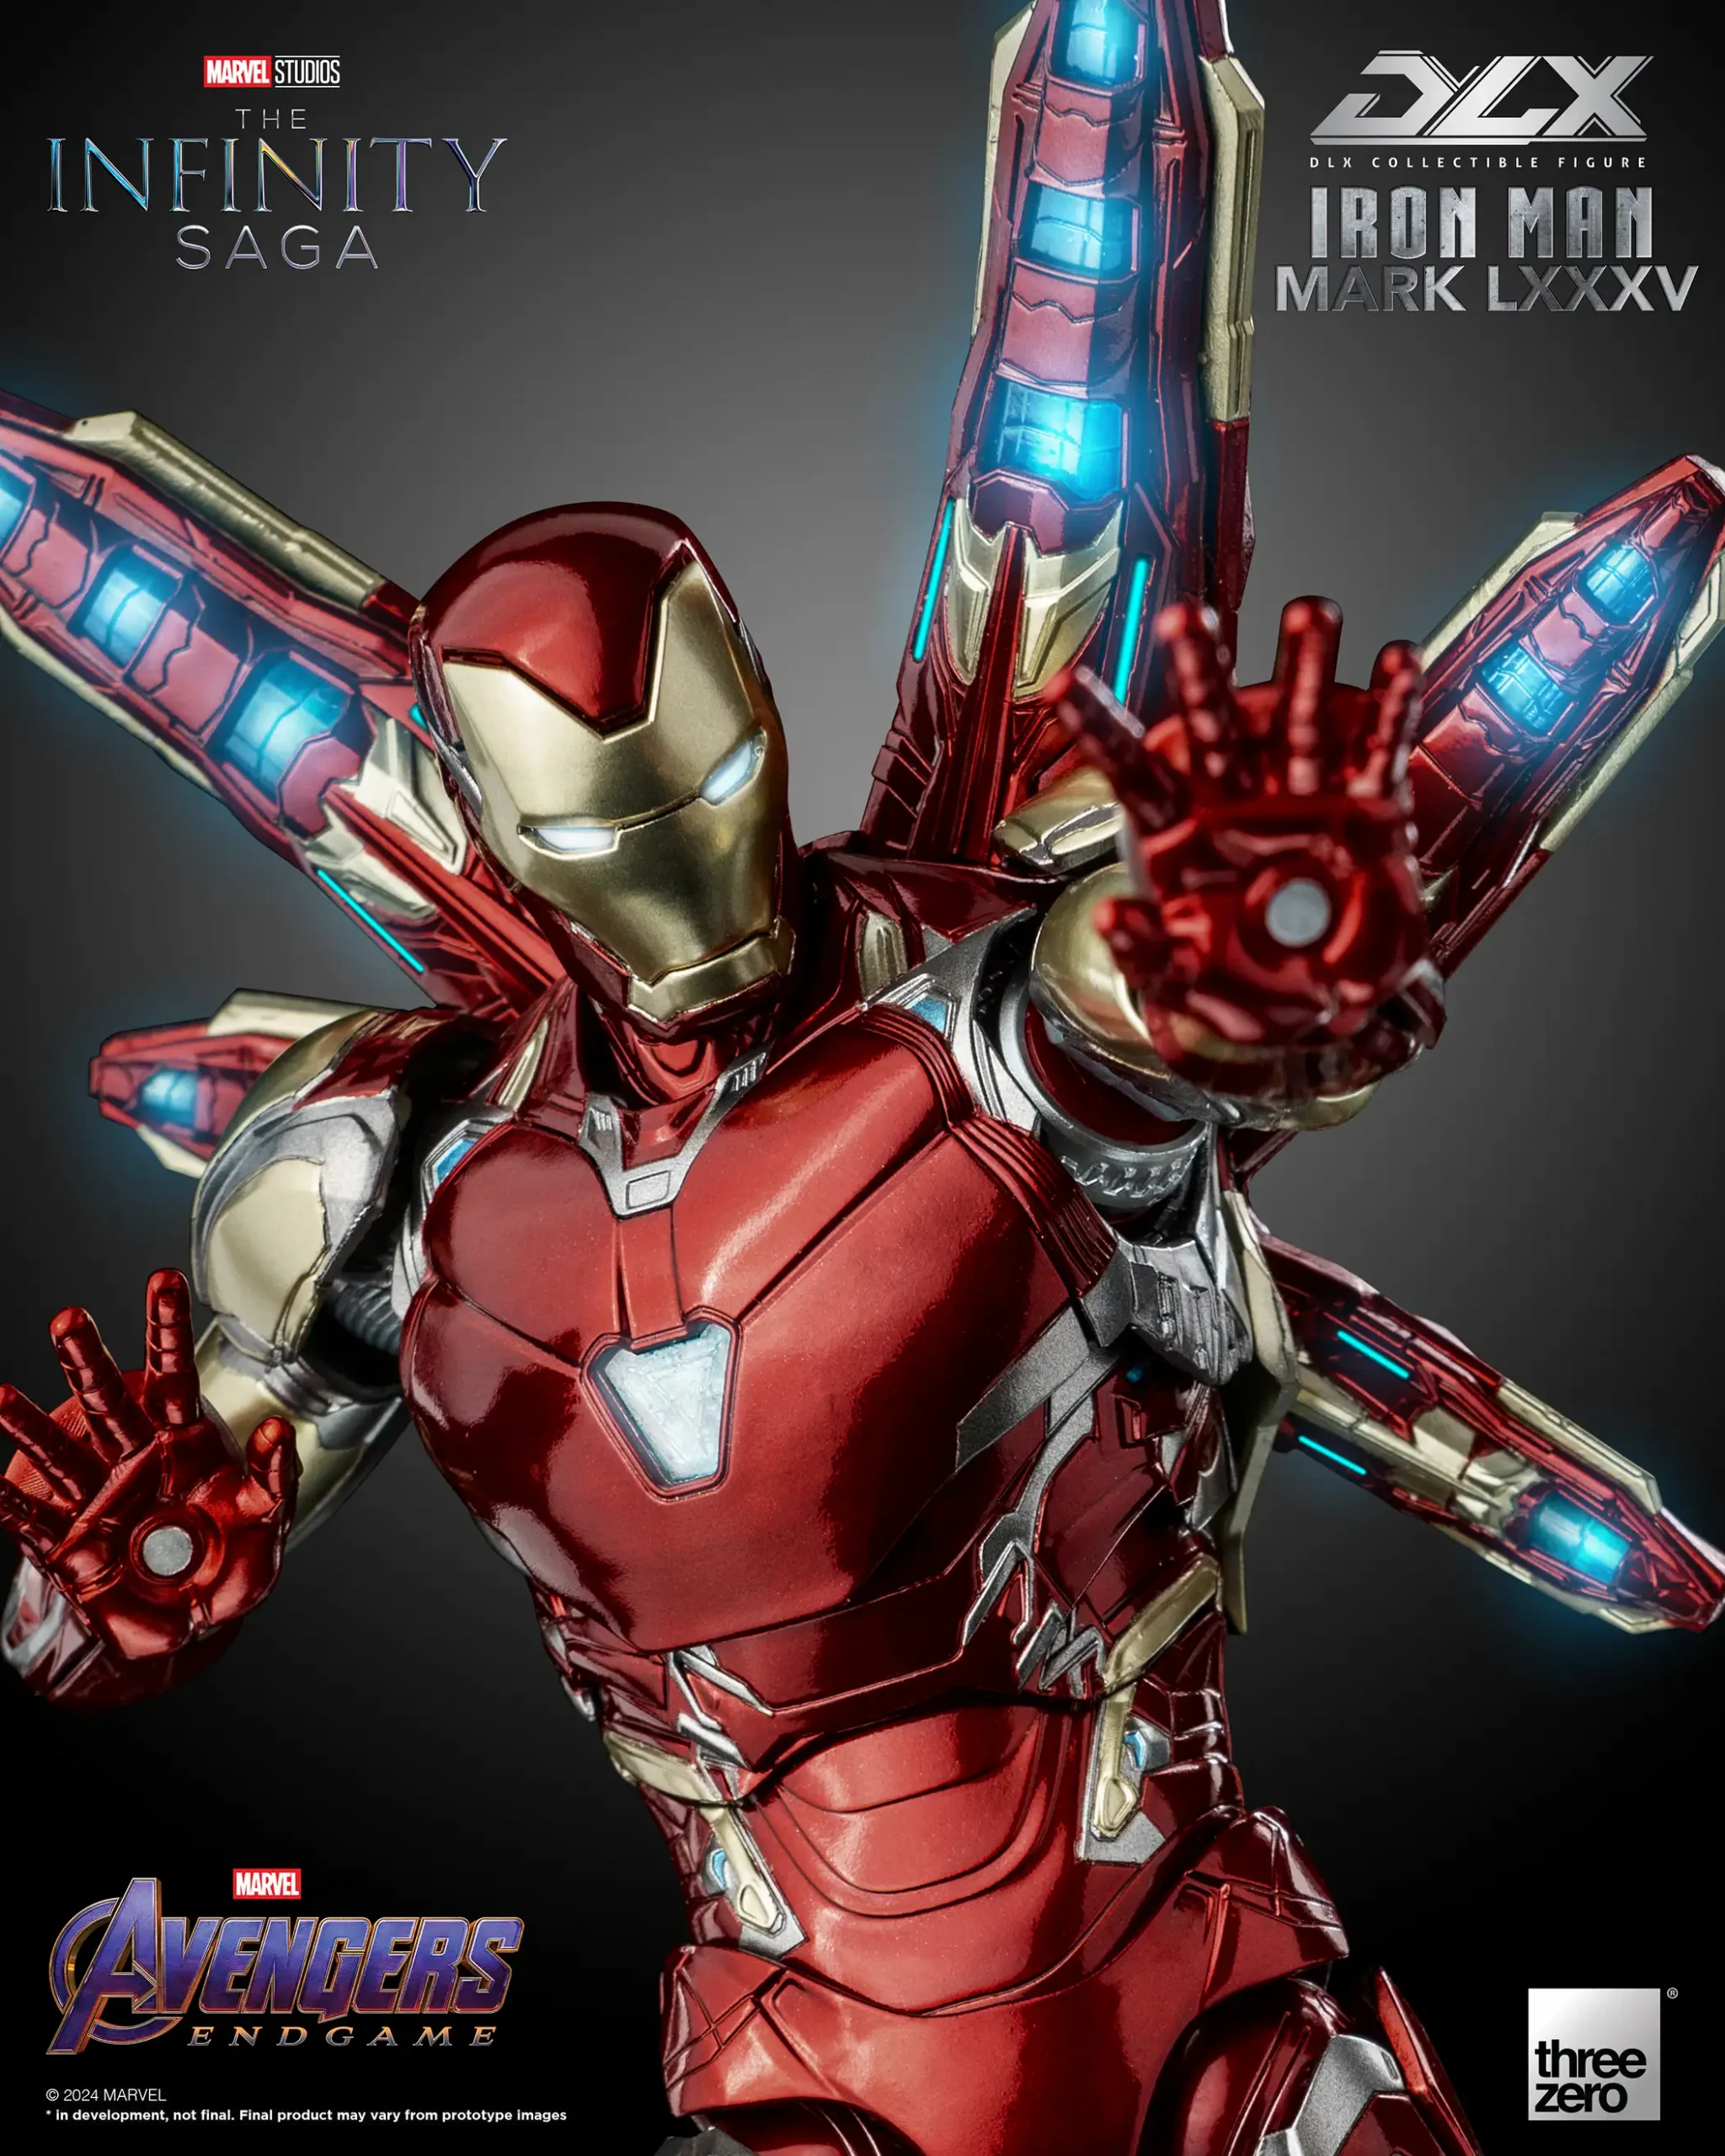 Marvel Studios: The Infinity SagaDLX アイアンマン・マーク85 